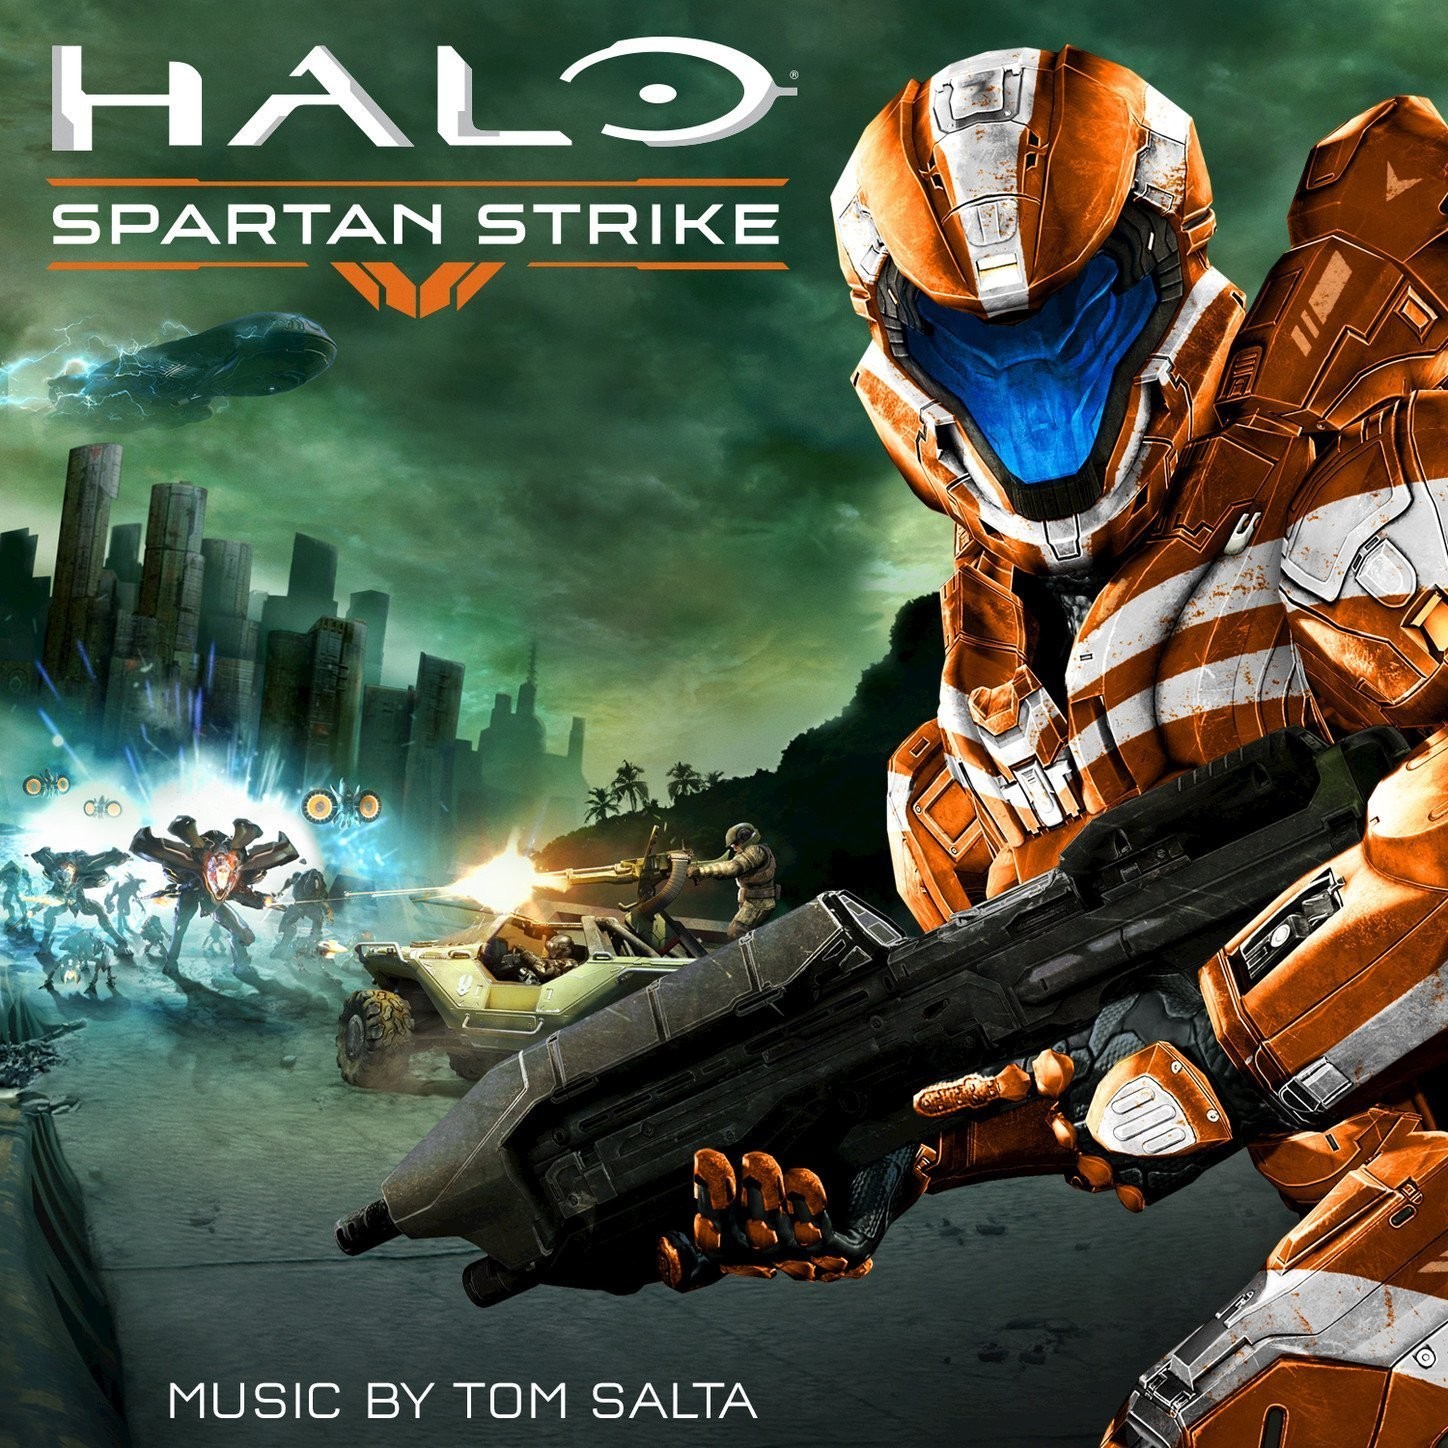 Halo full game download free